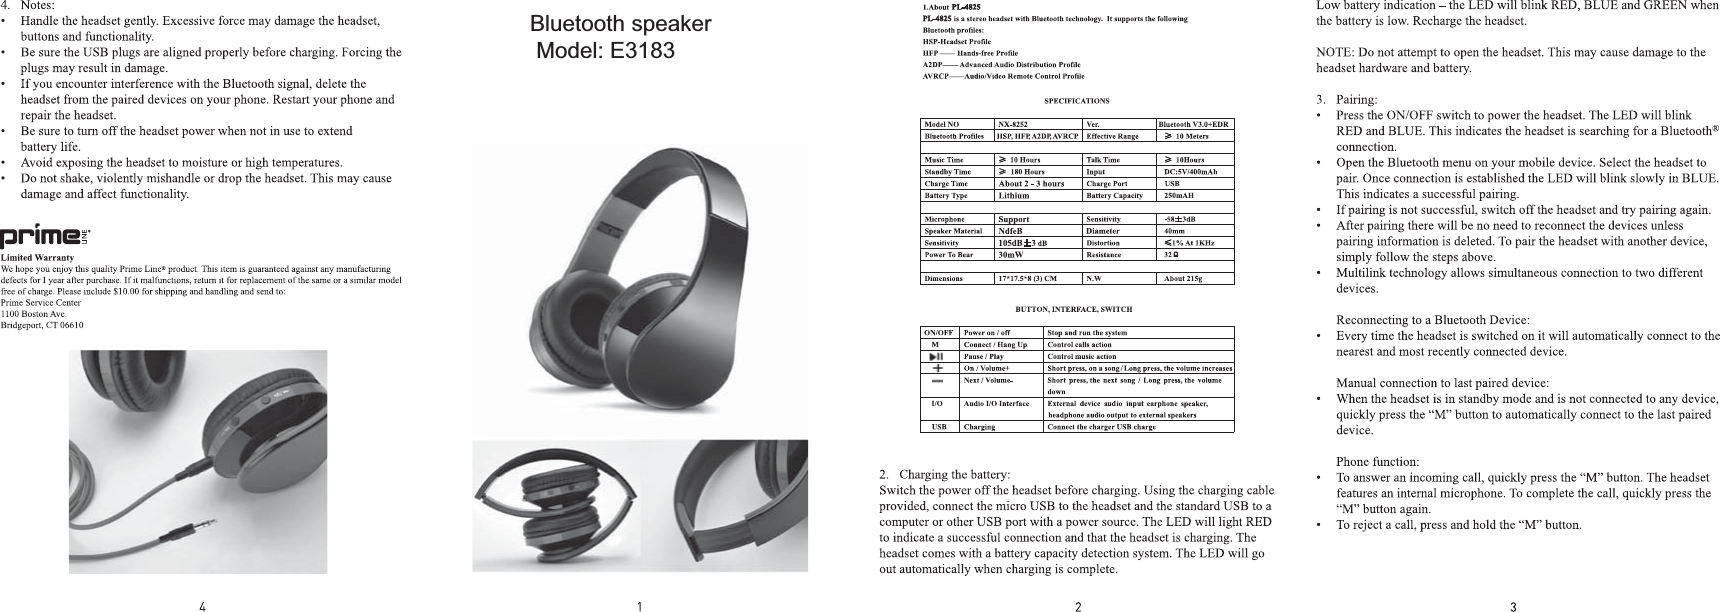 Bluetooth speakerModel: E3183